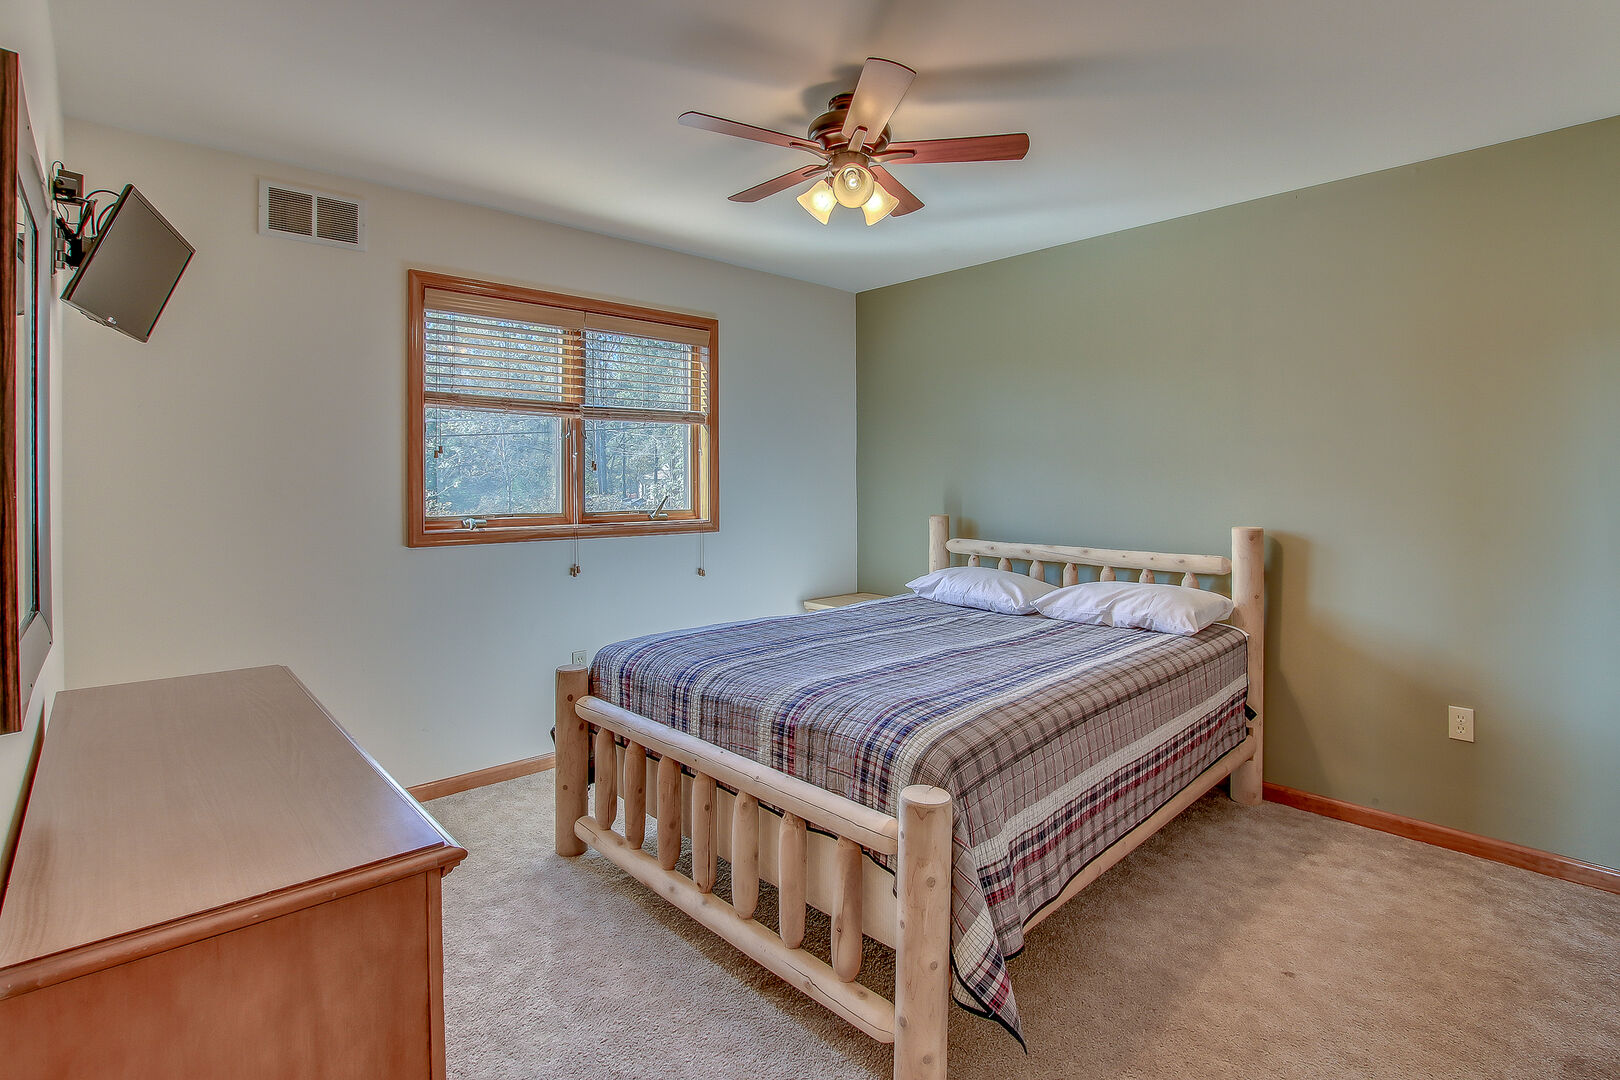 Bedroom in Poconos Lake Rental Featuring Wooden Bed.